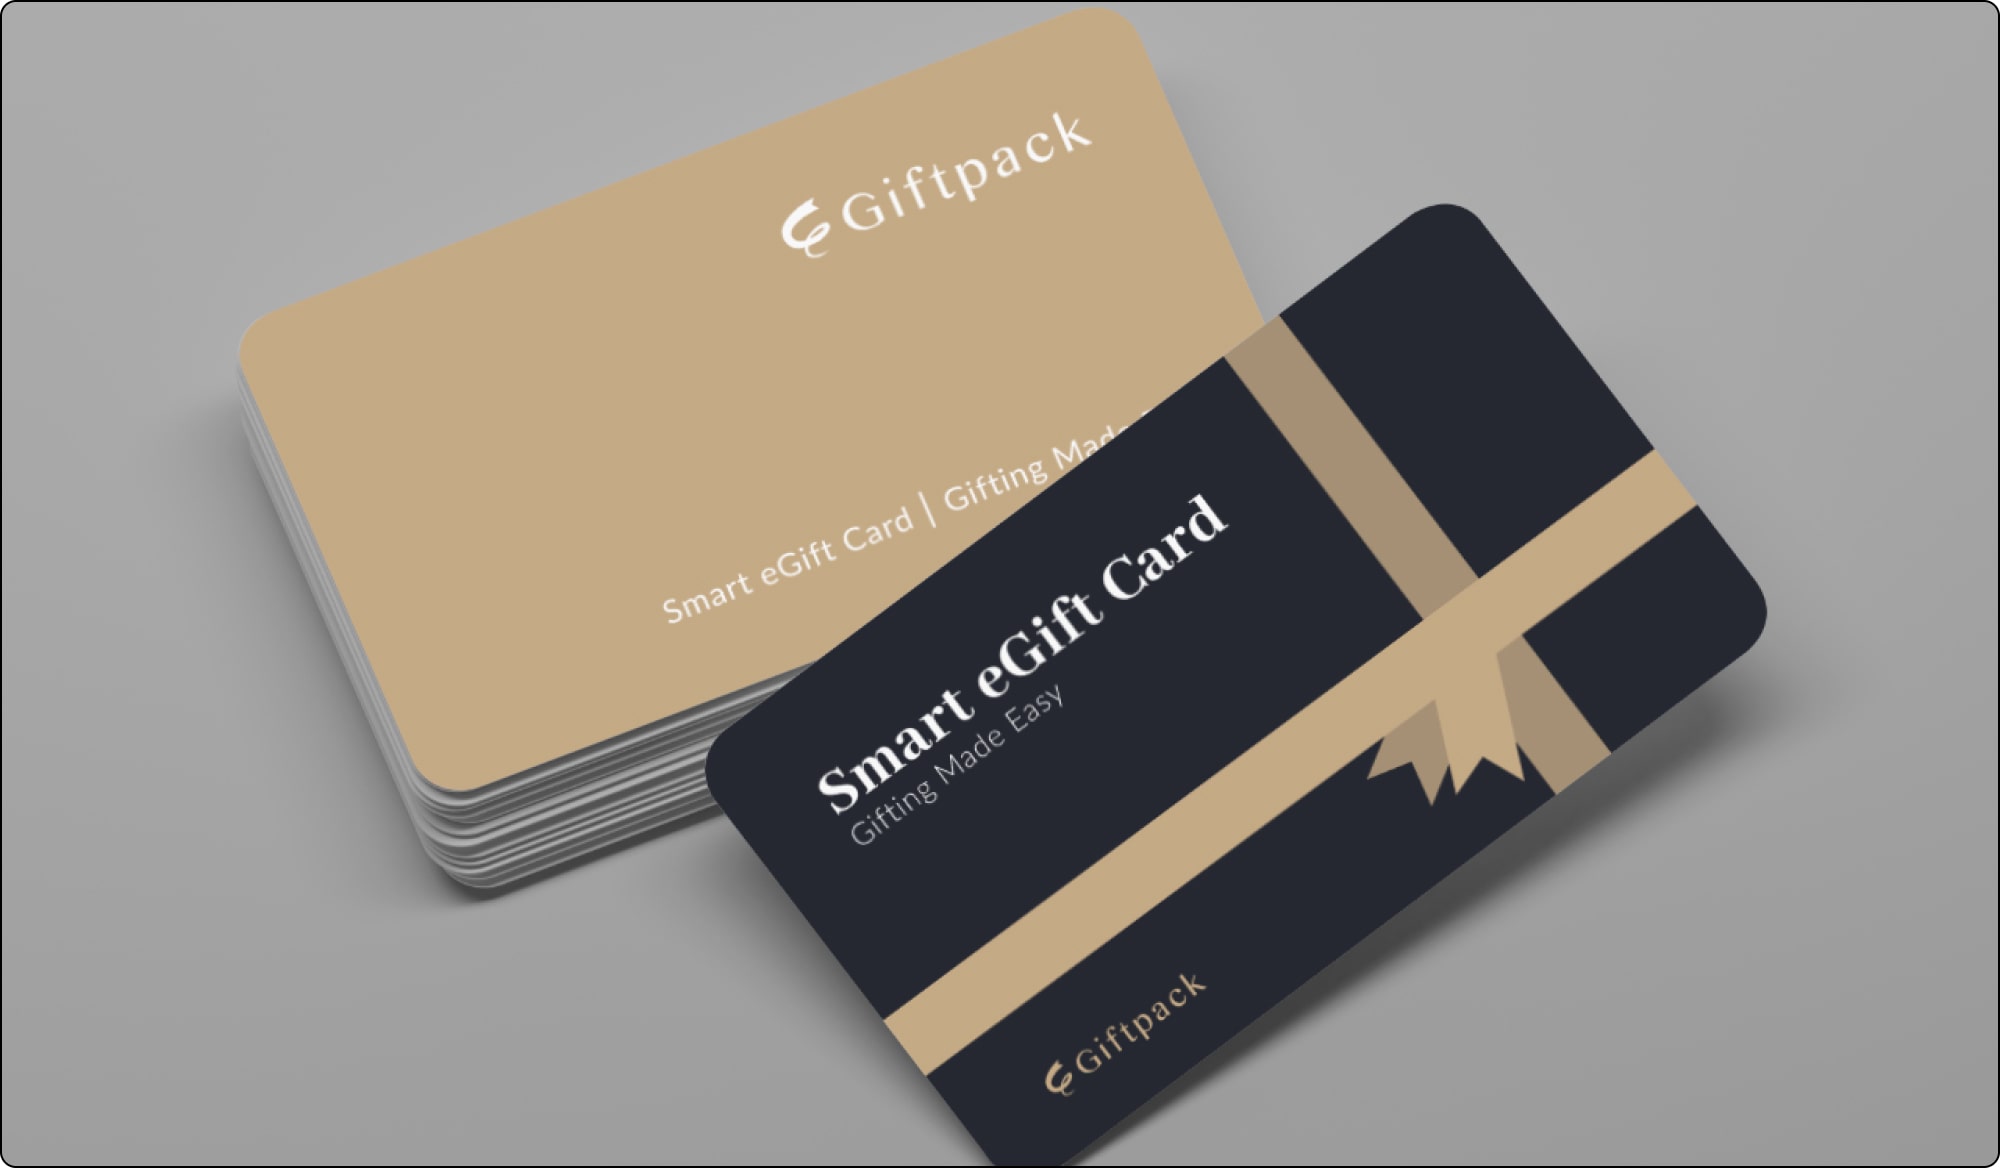 giftpack smart egift card for 350 brands for gift for client appreciation